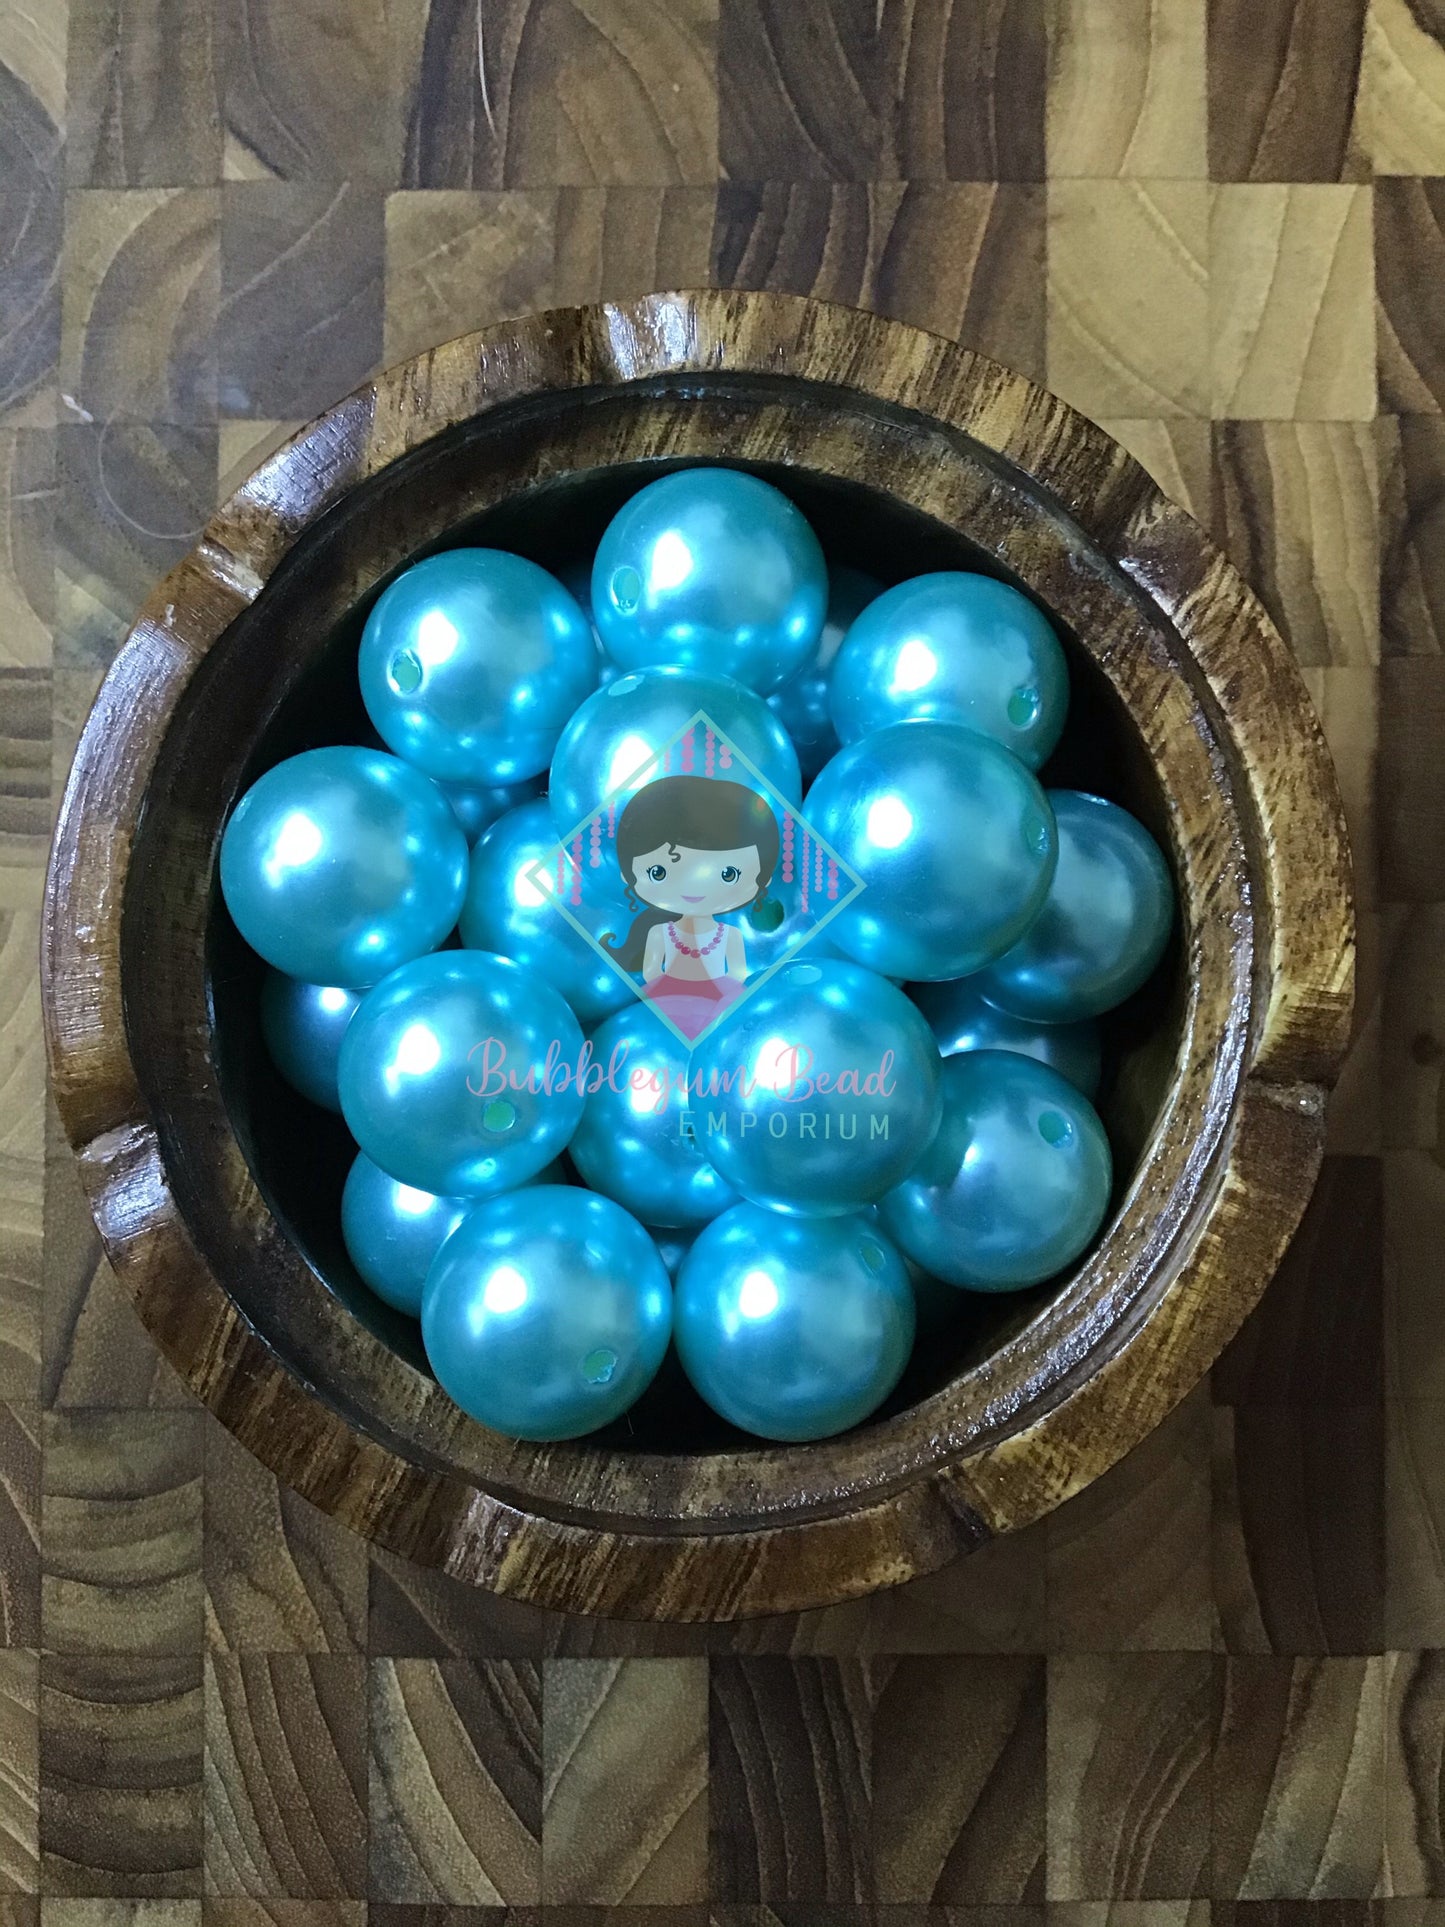 Azure Pearl Beads